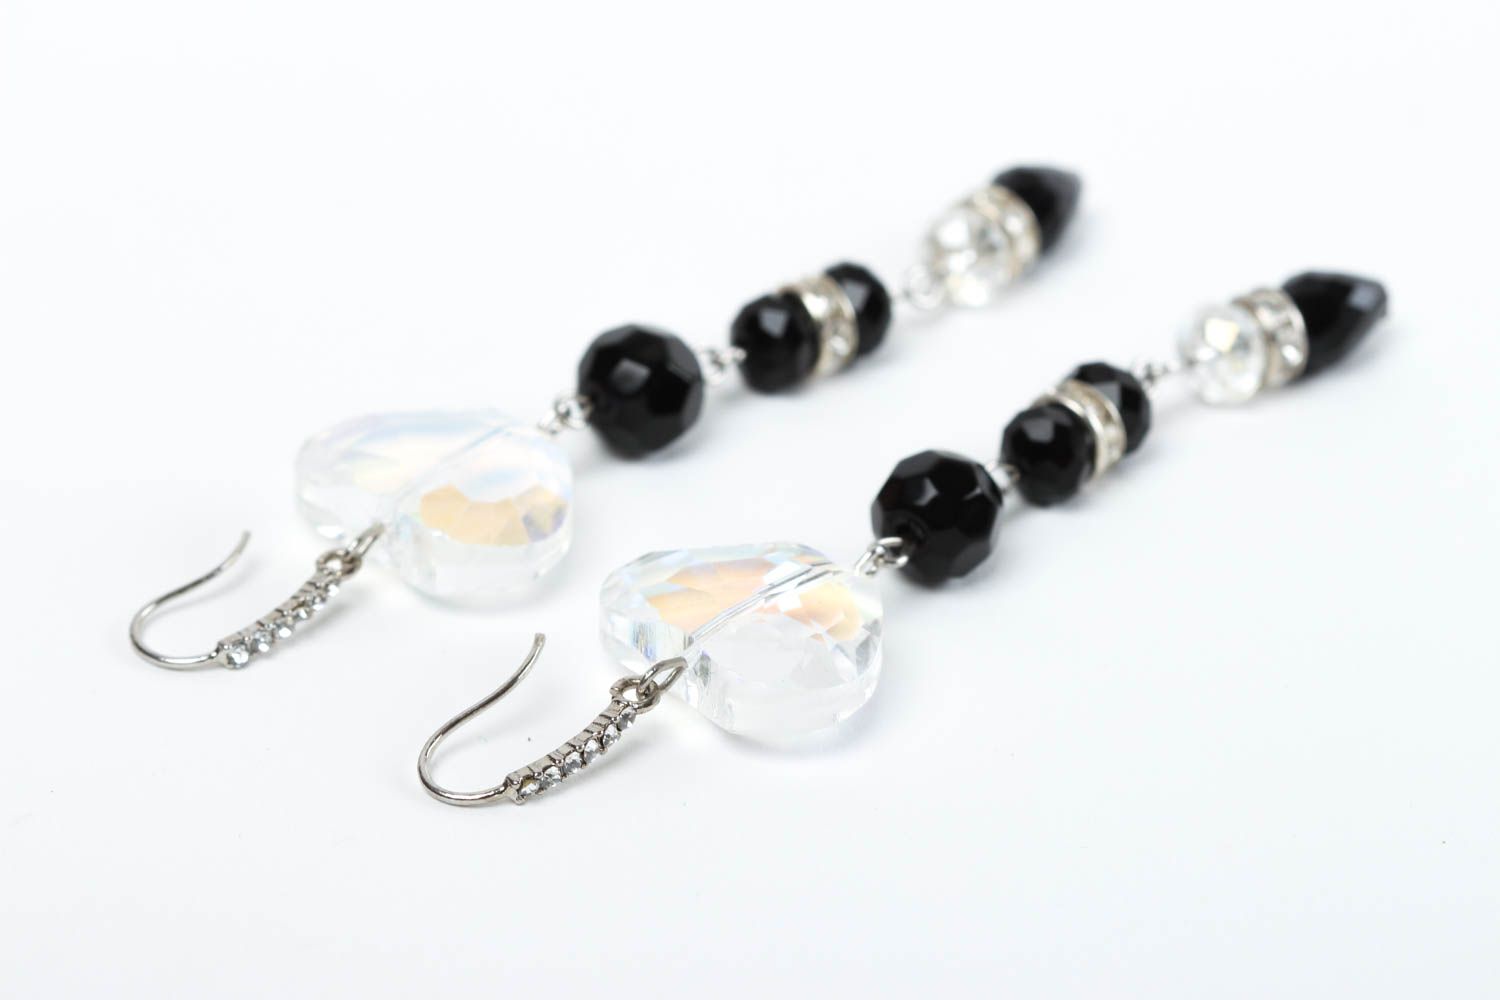 Handmade earrings designer accessory unusual gift metal earrings gift ideas photo 4